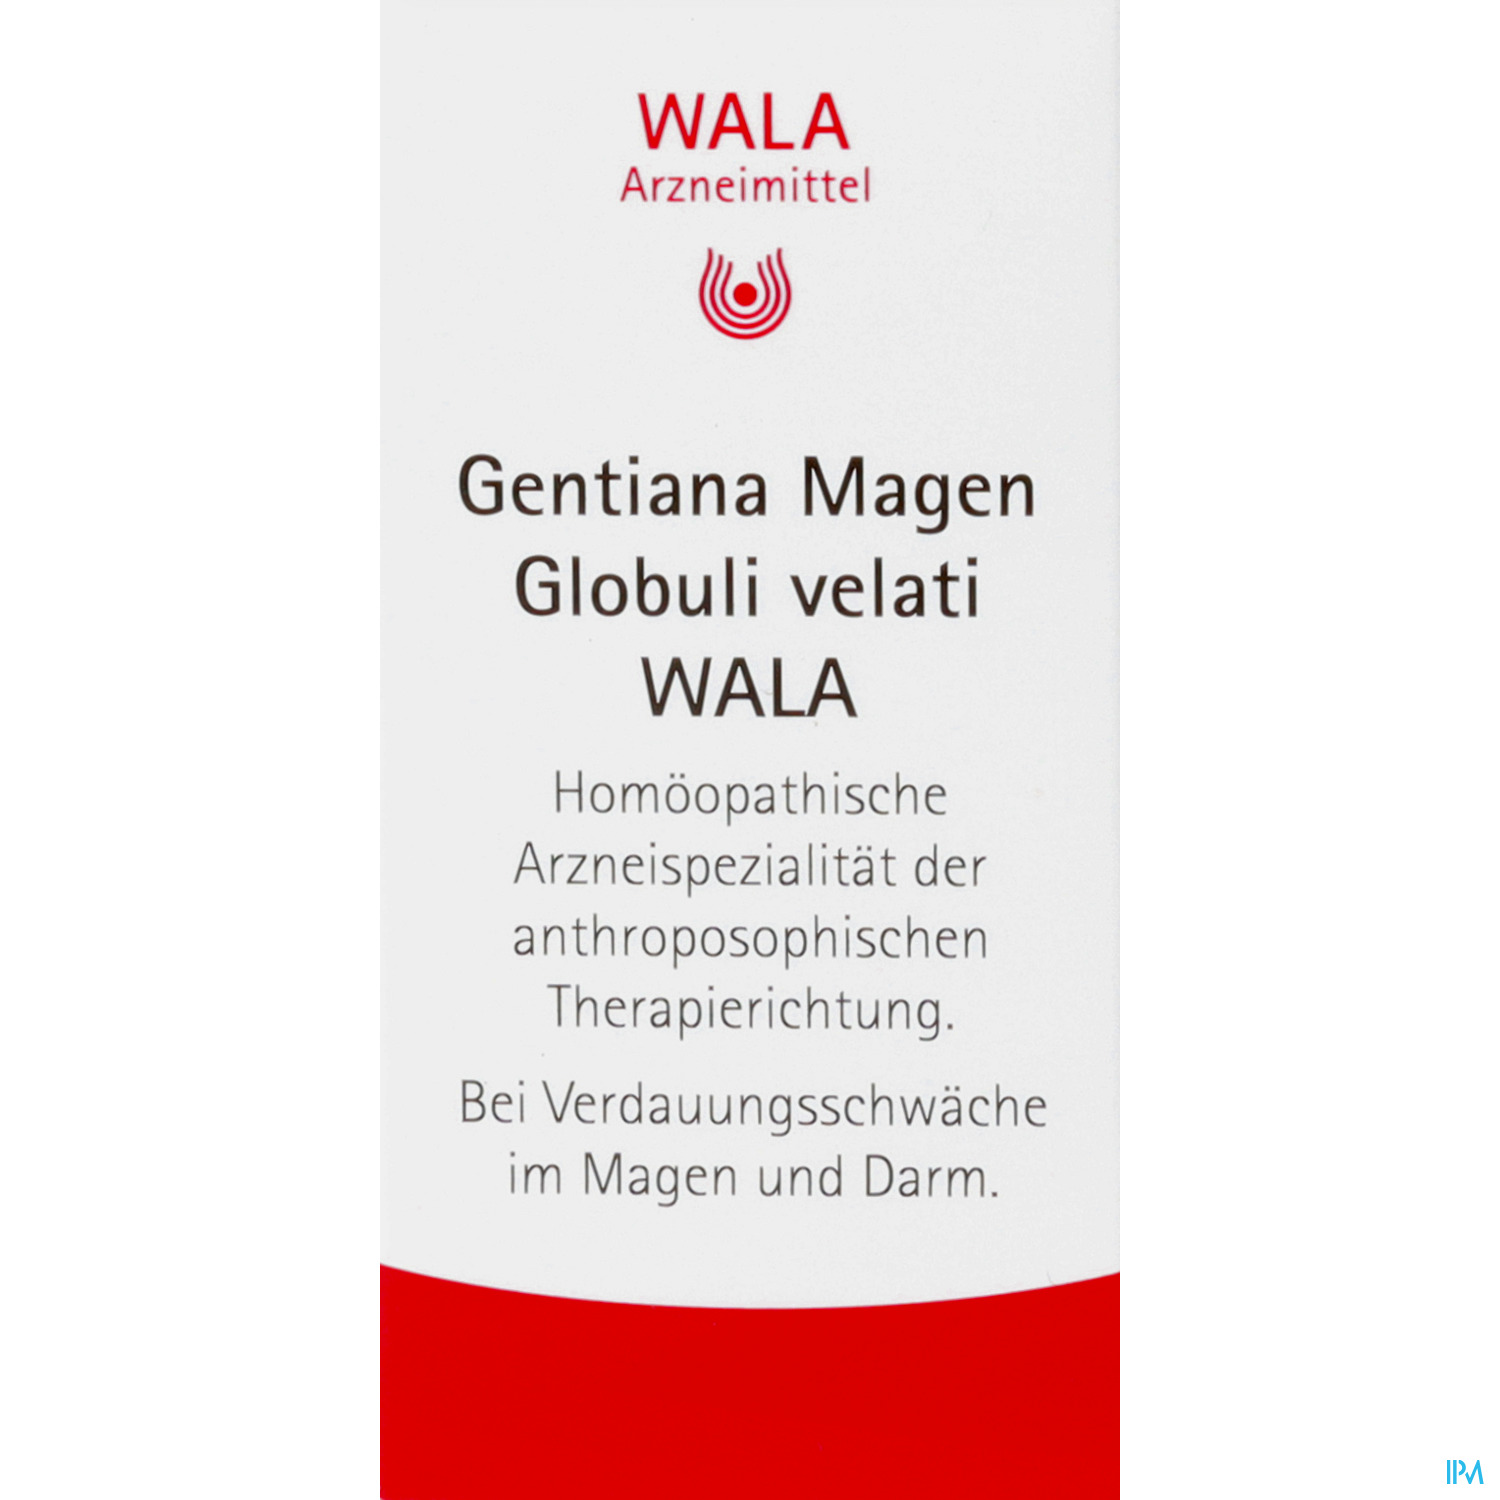 Gentiana Magen - Globuli velati Wala